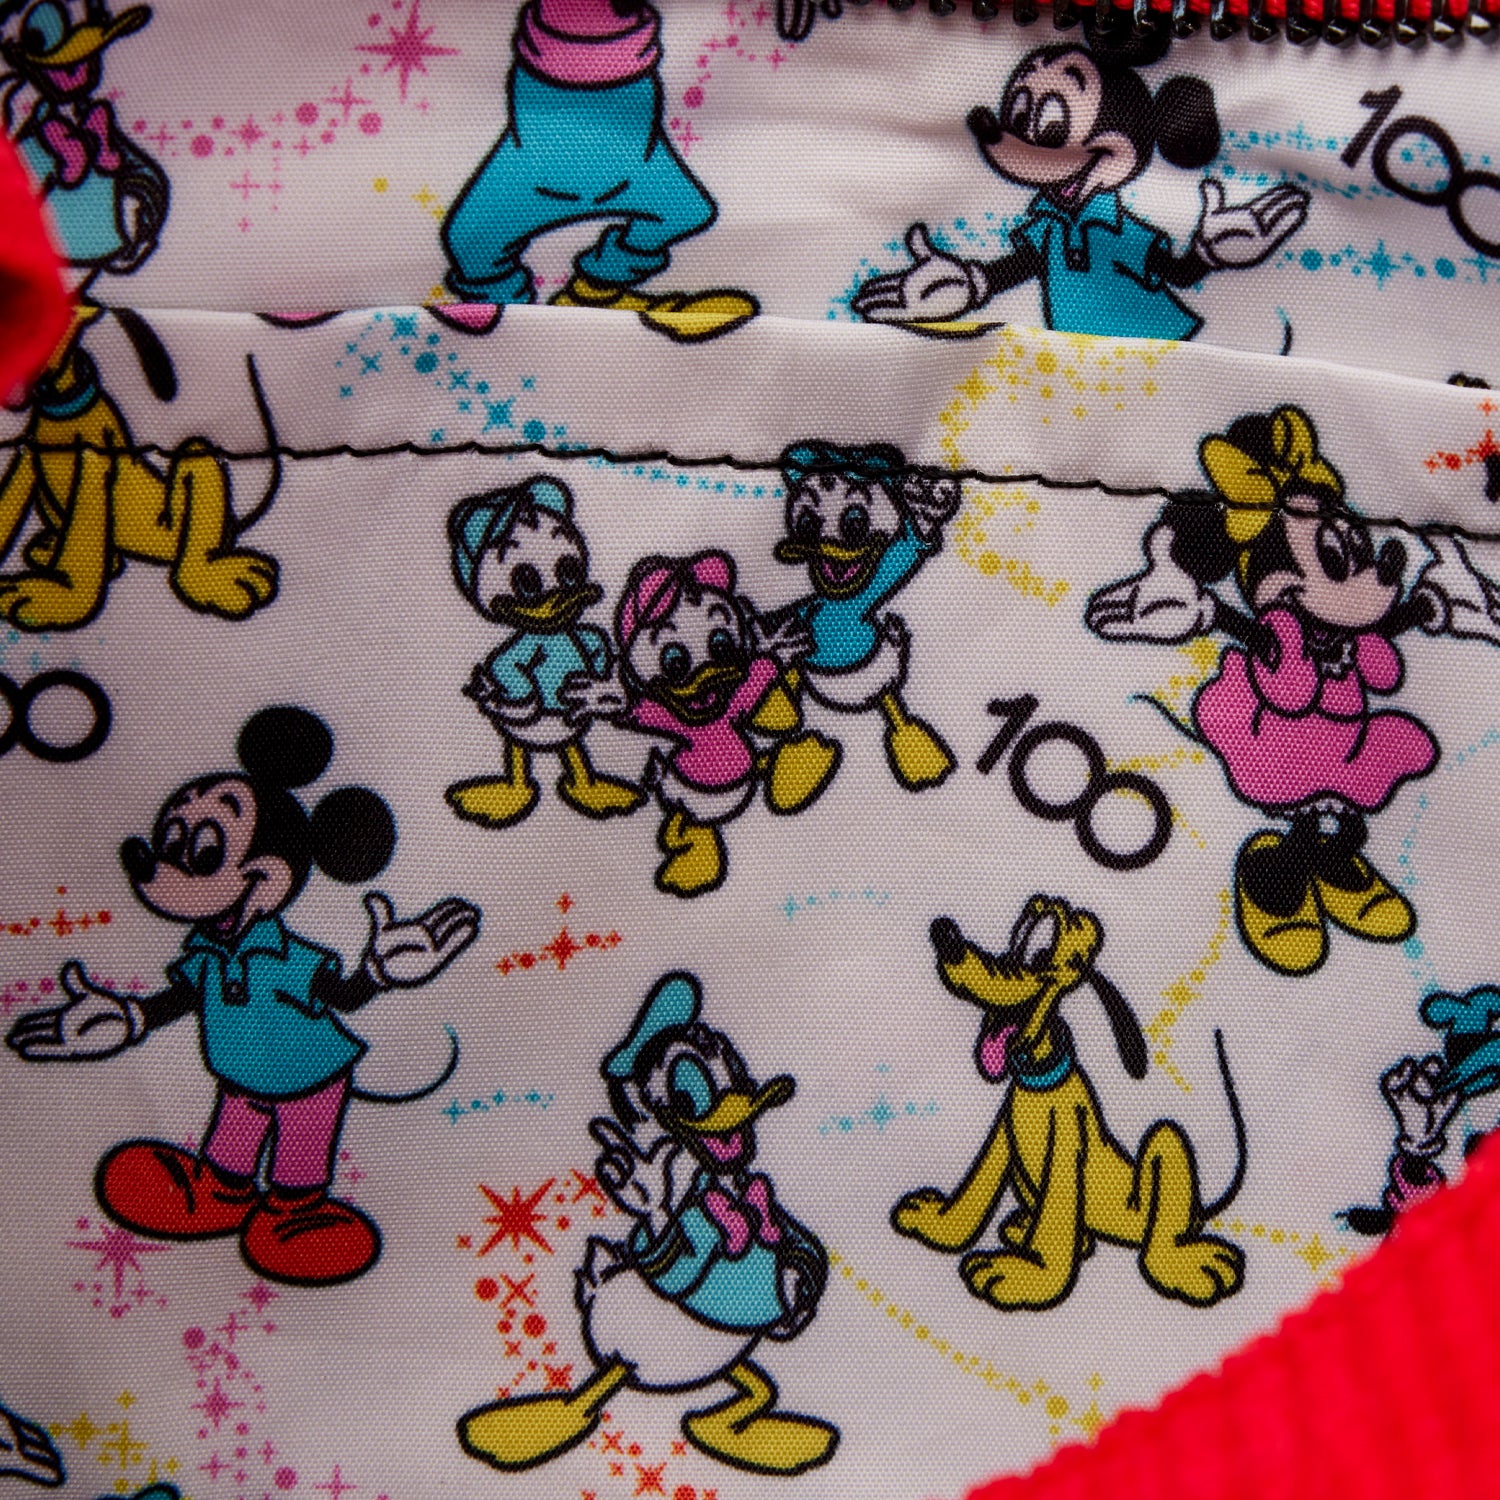 Loungefly x Disney 100 Mickey Hands Crossbody Bag